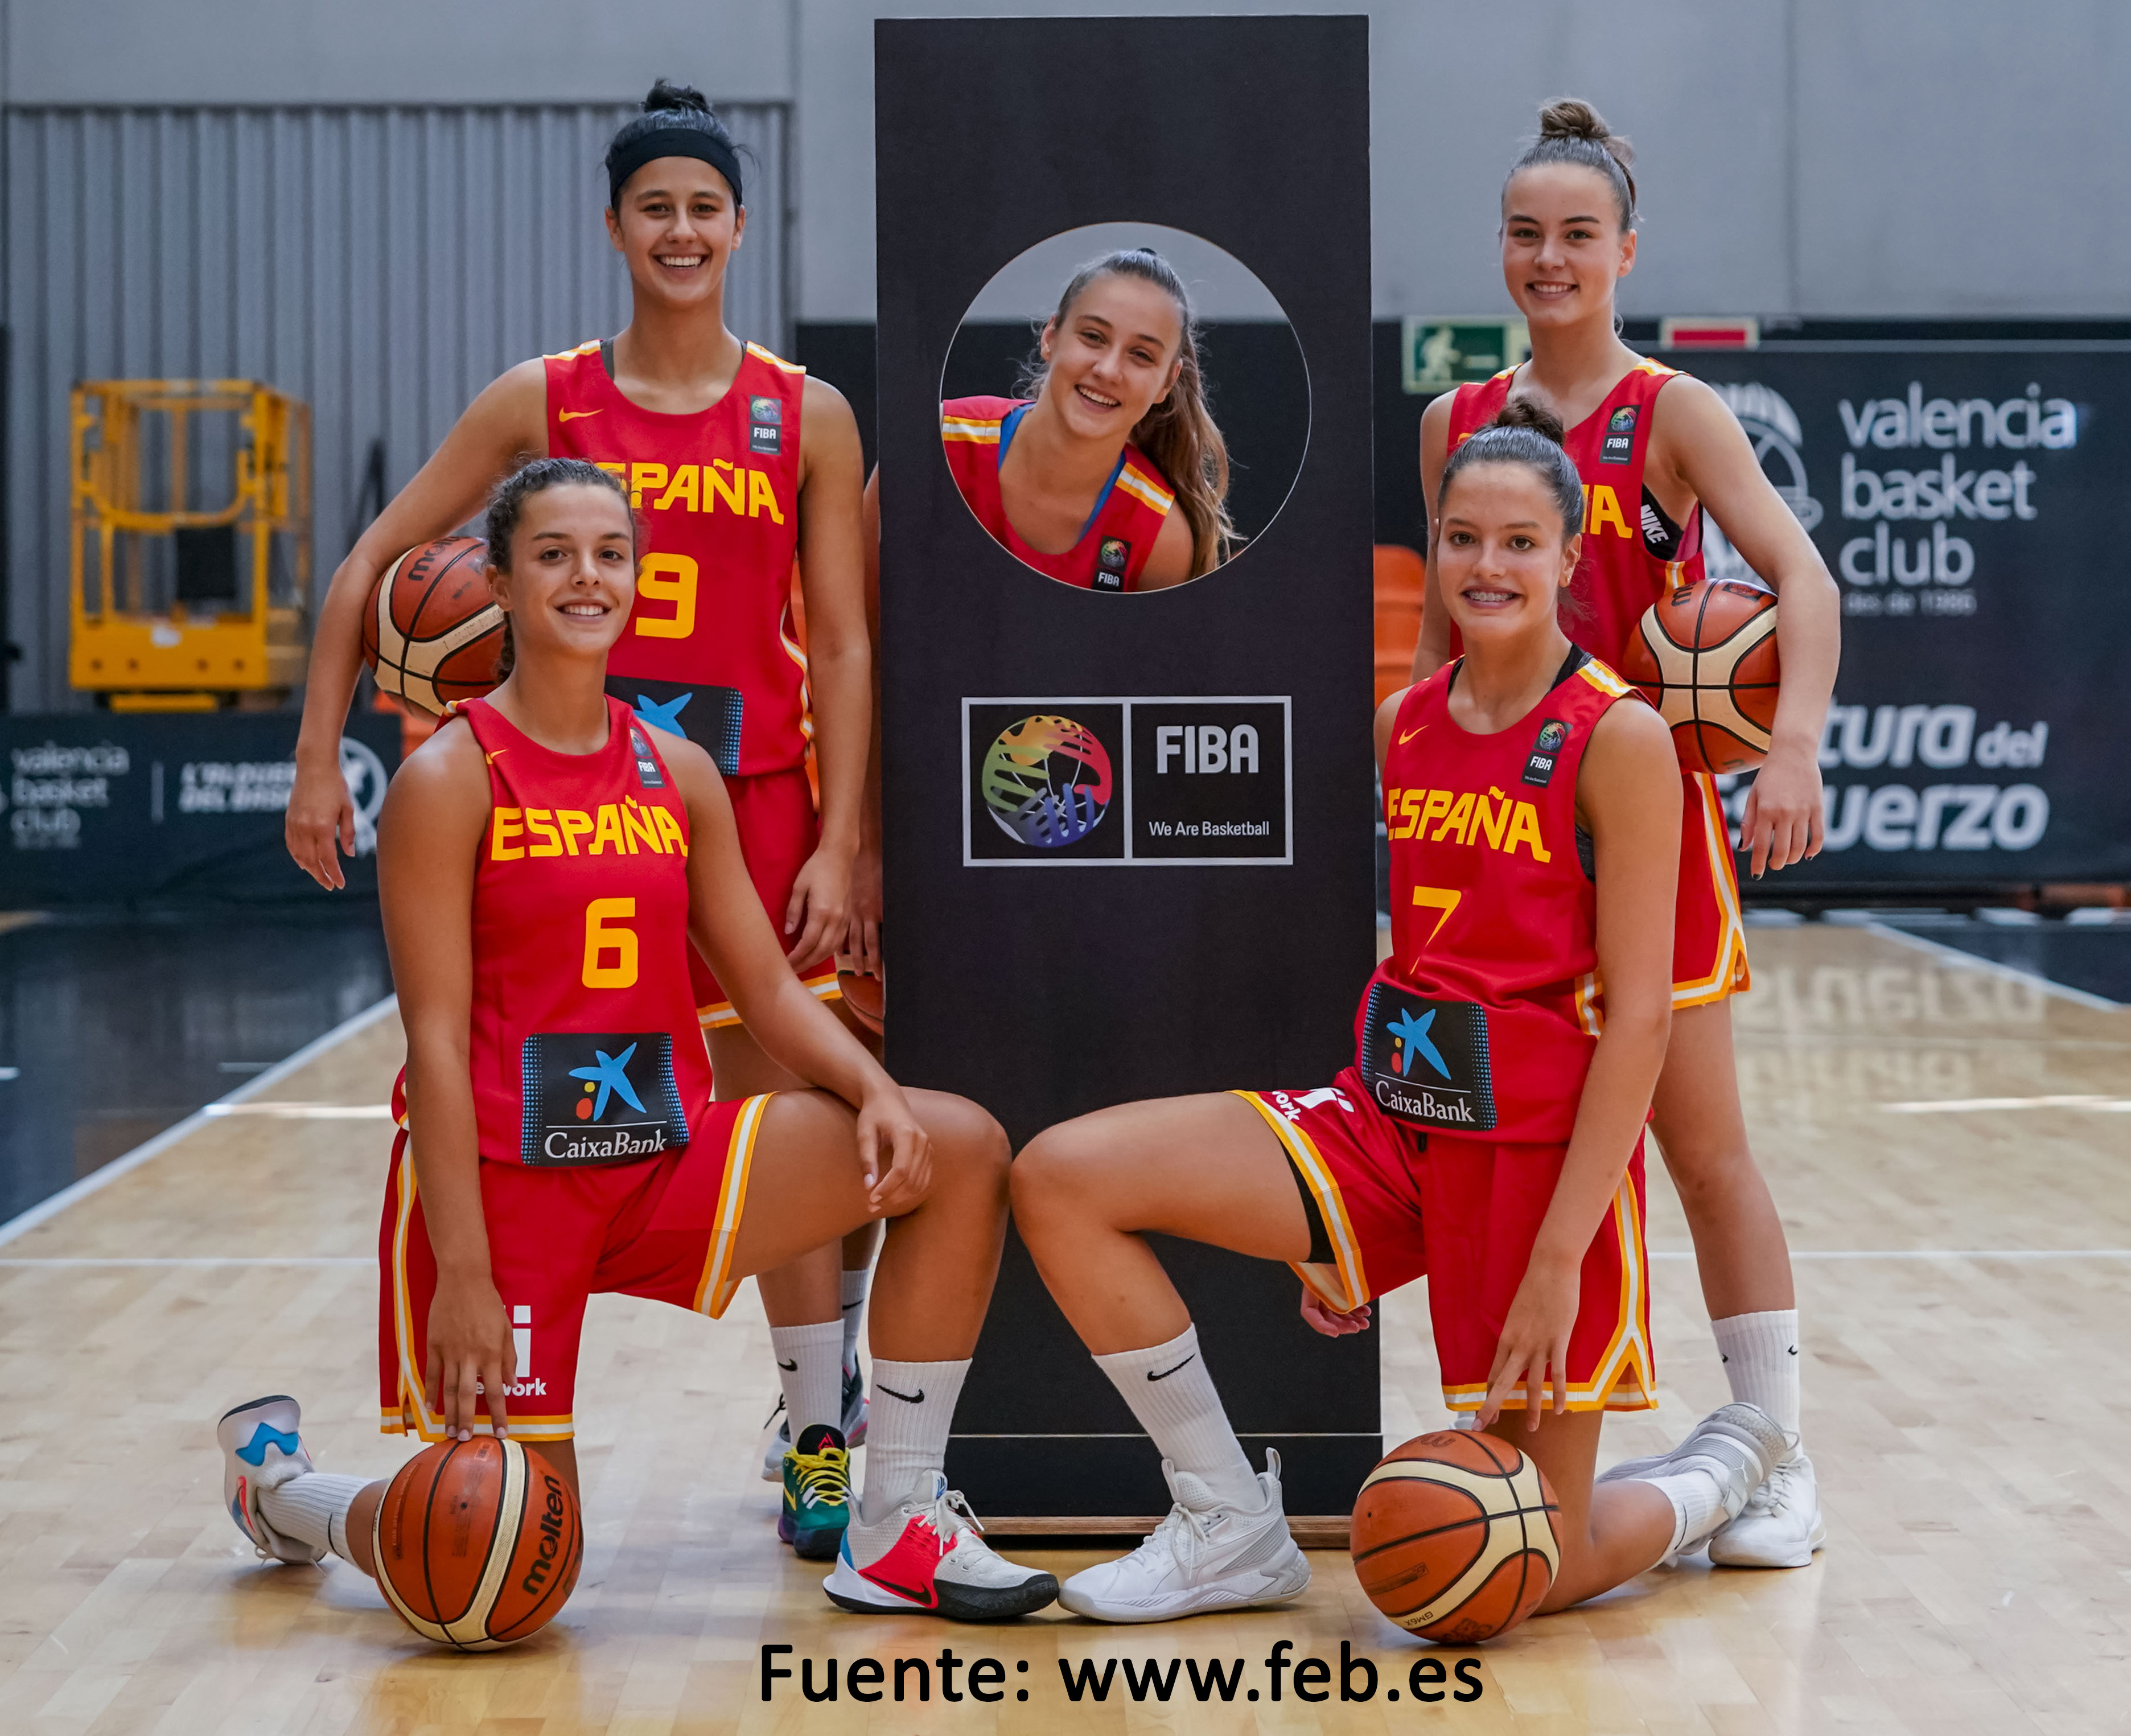 La A. A. Inés Noguero Outeiral (p 2022) medalla de habilidad en el FIBA Skills Challenge max-width=